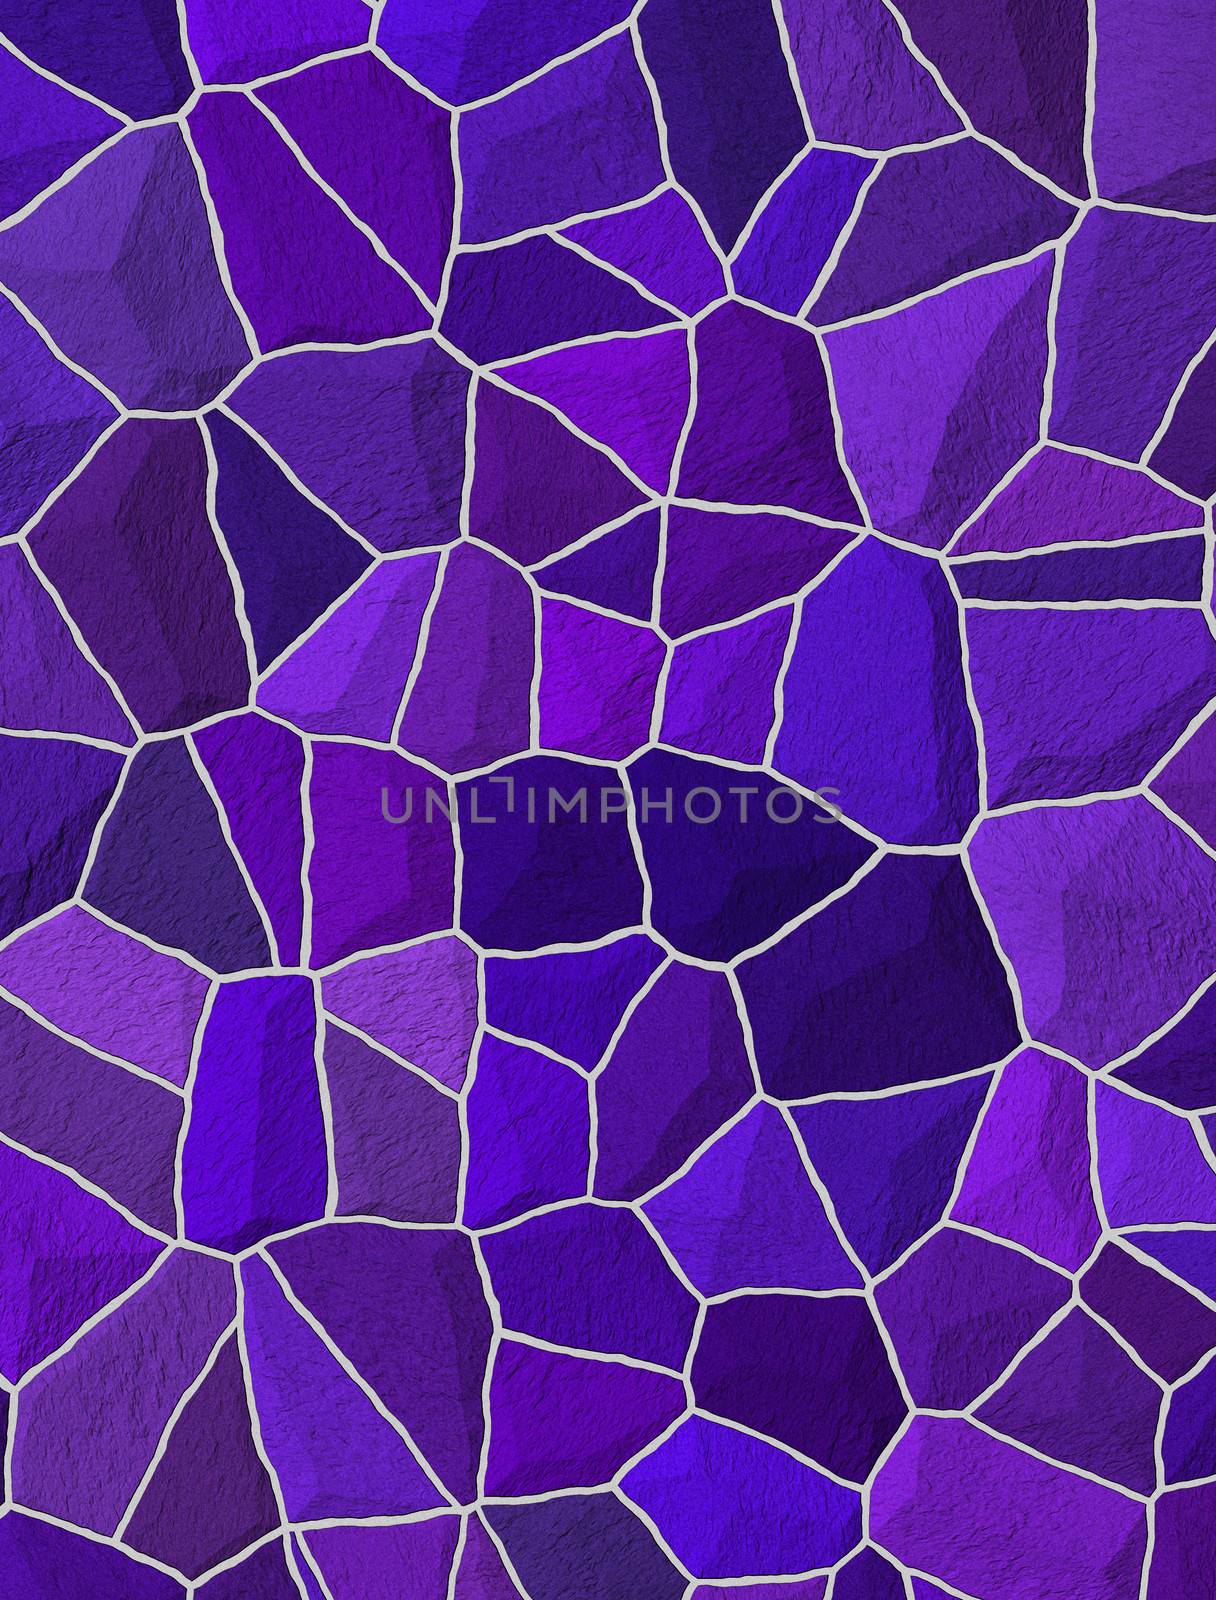 violet trencadis broken tiles mosaic